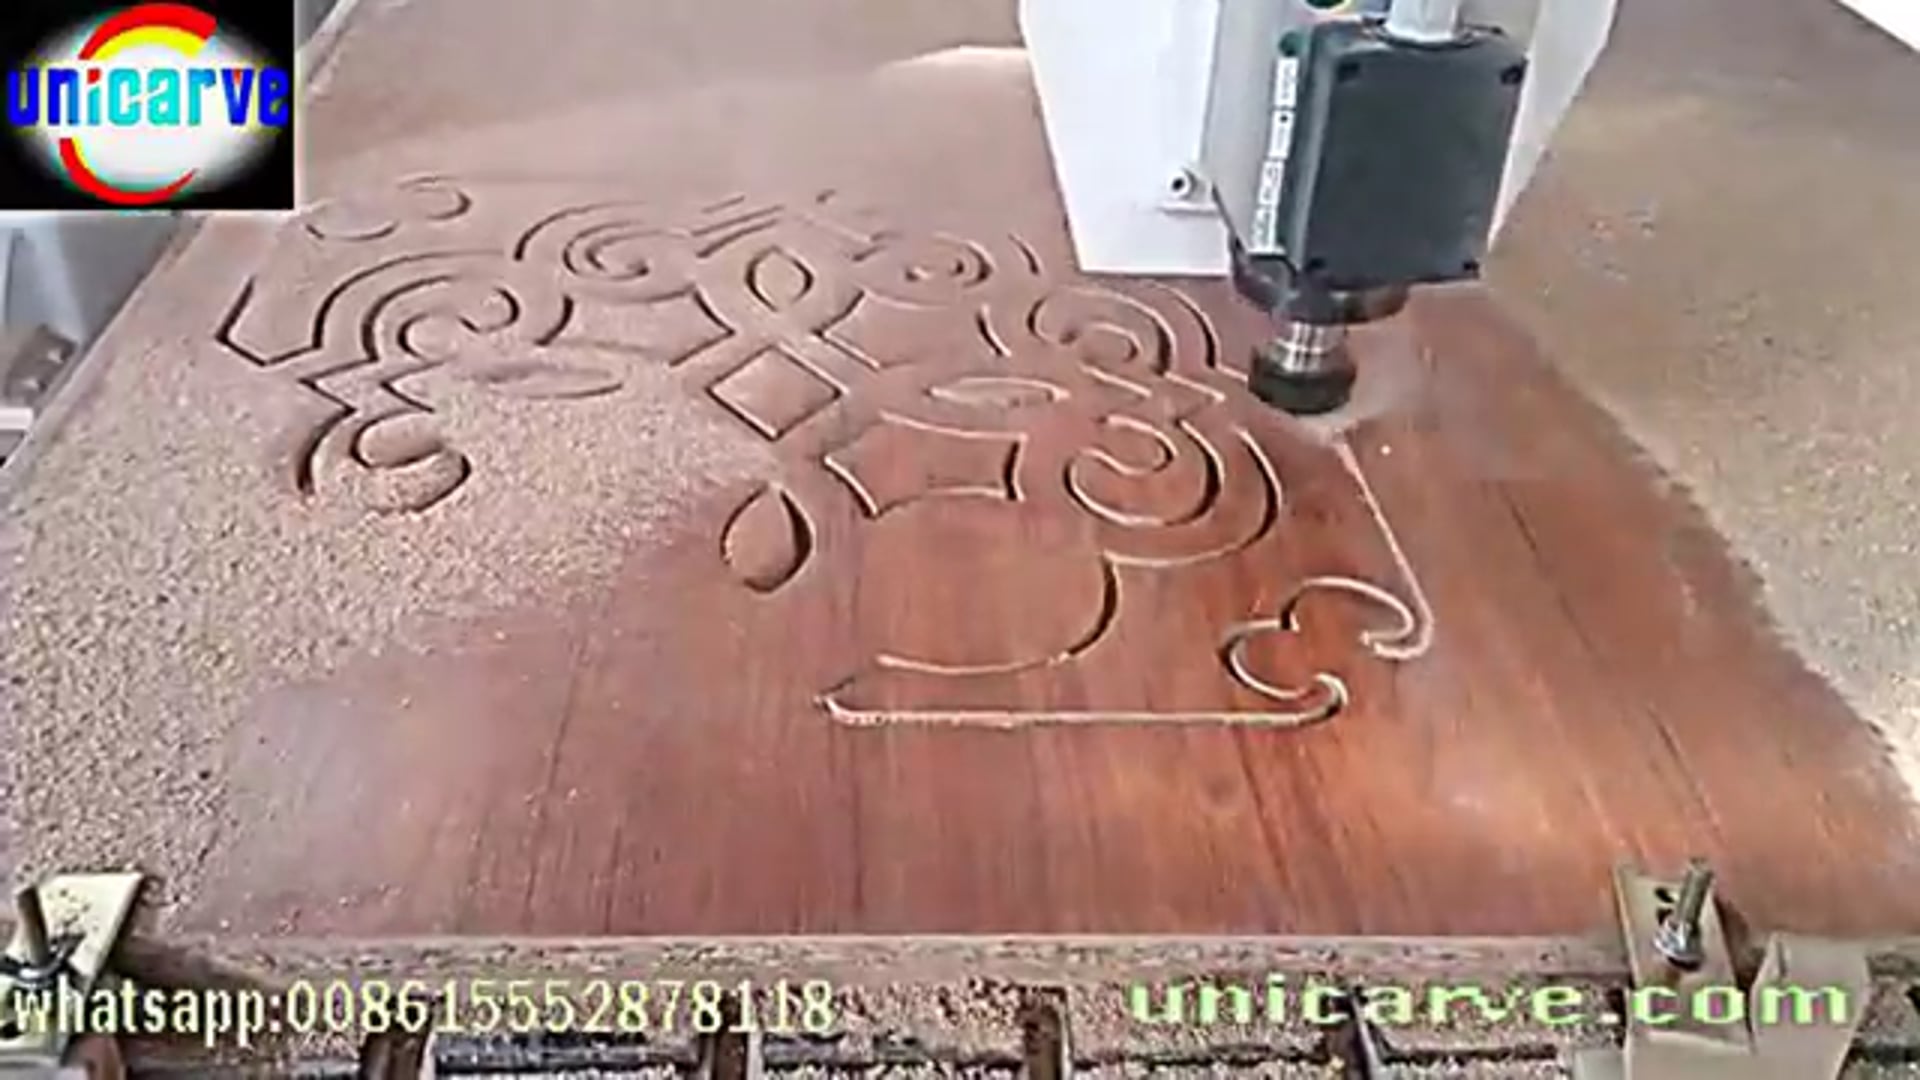 cnc wood carving machines 3d cnc wood carving machine/3d cnc wood carving machine cnc wood router